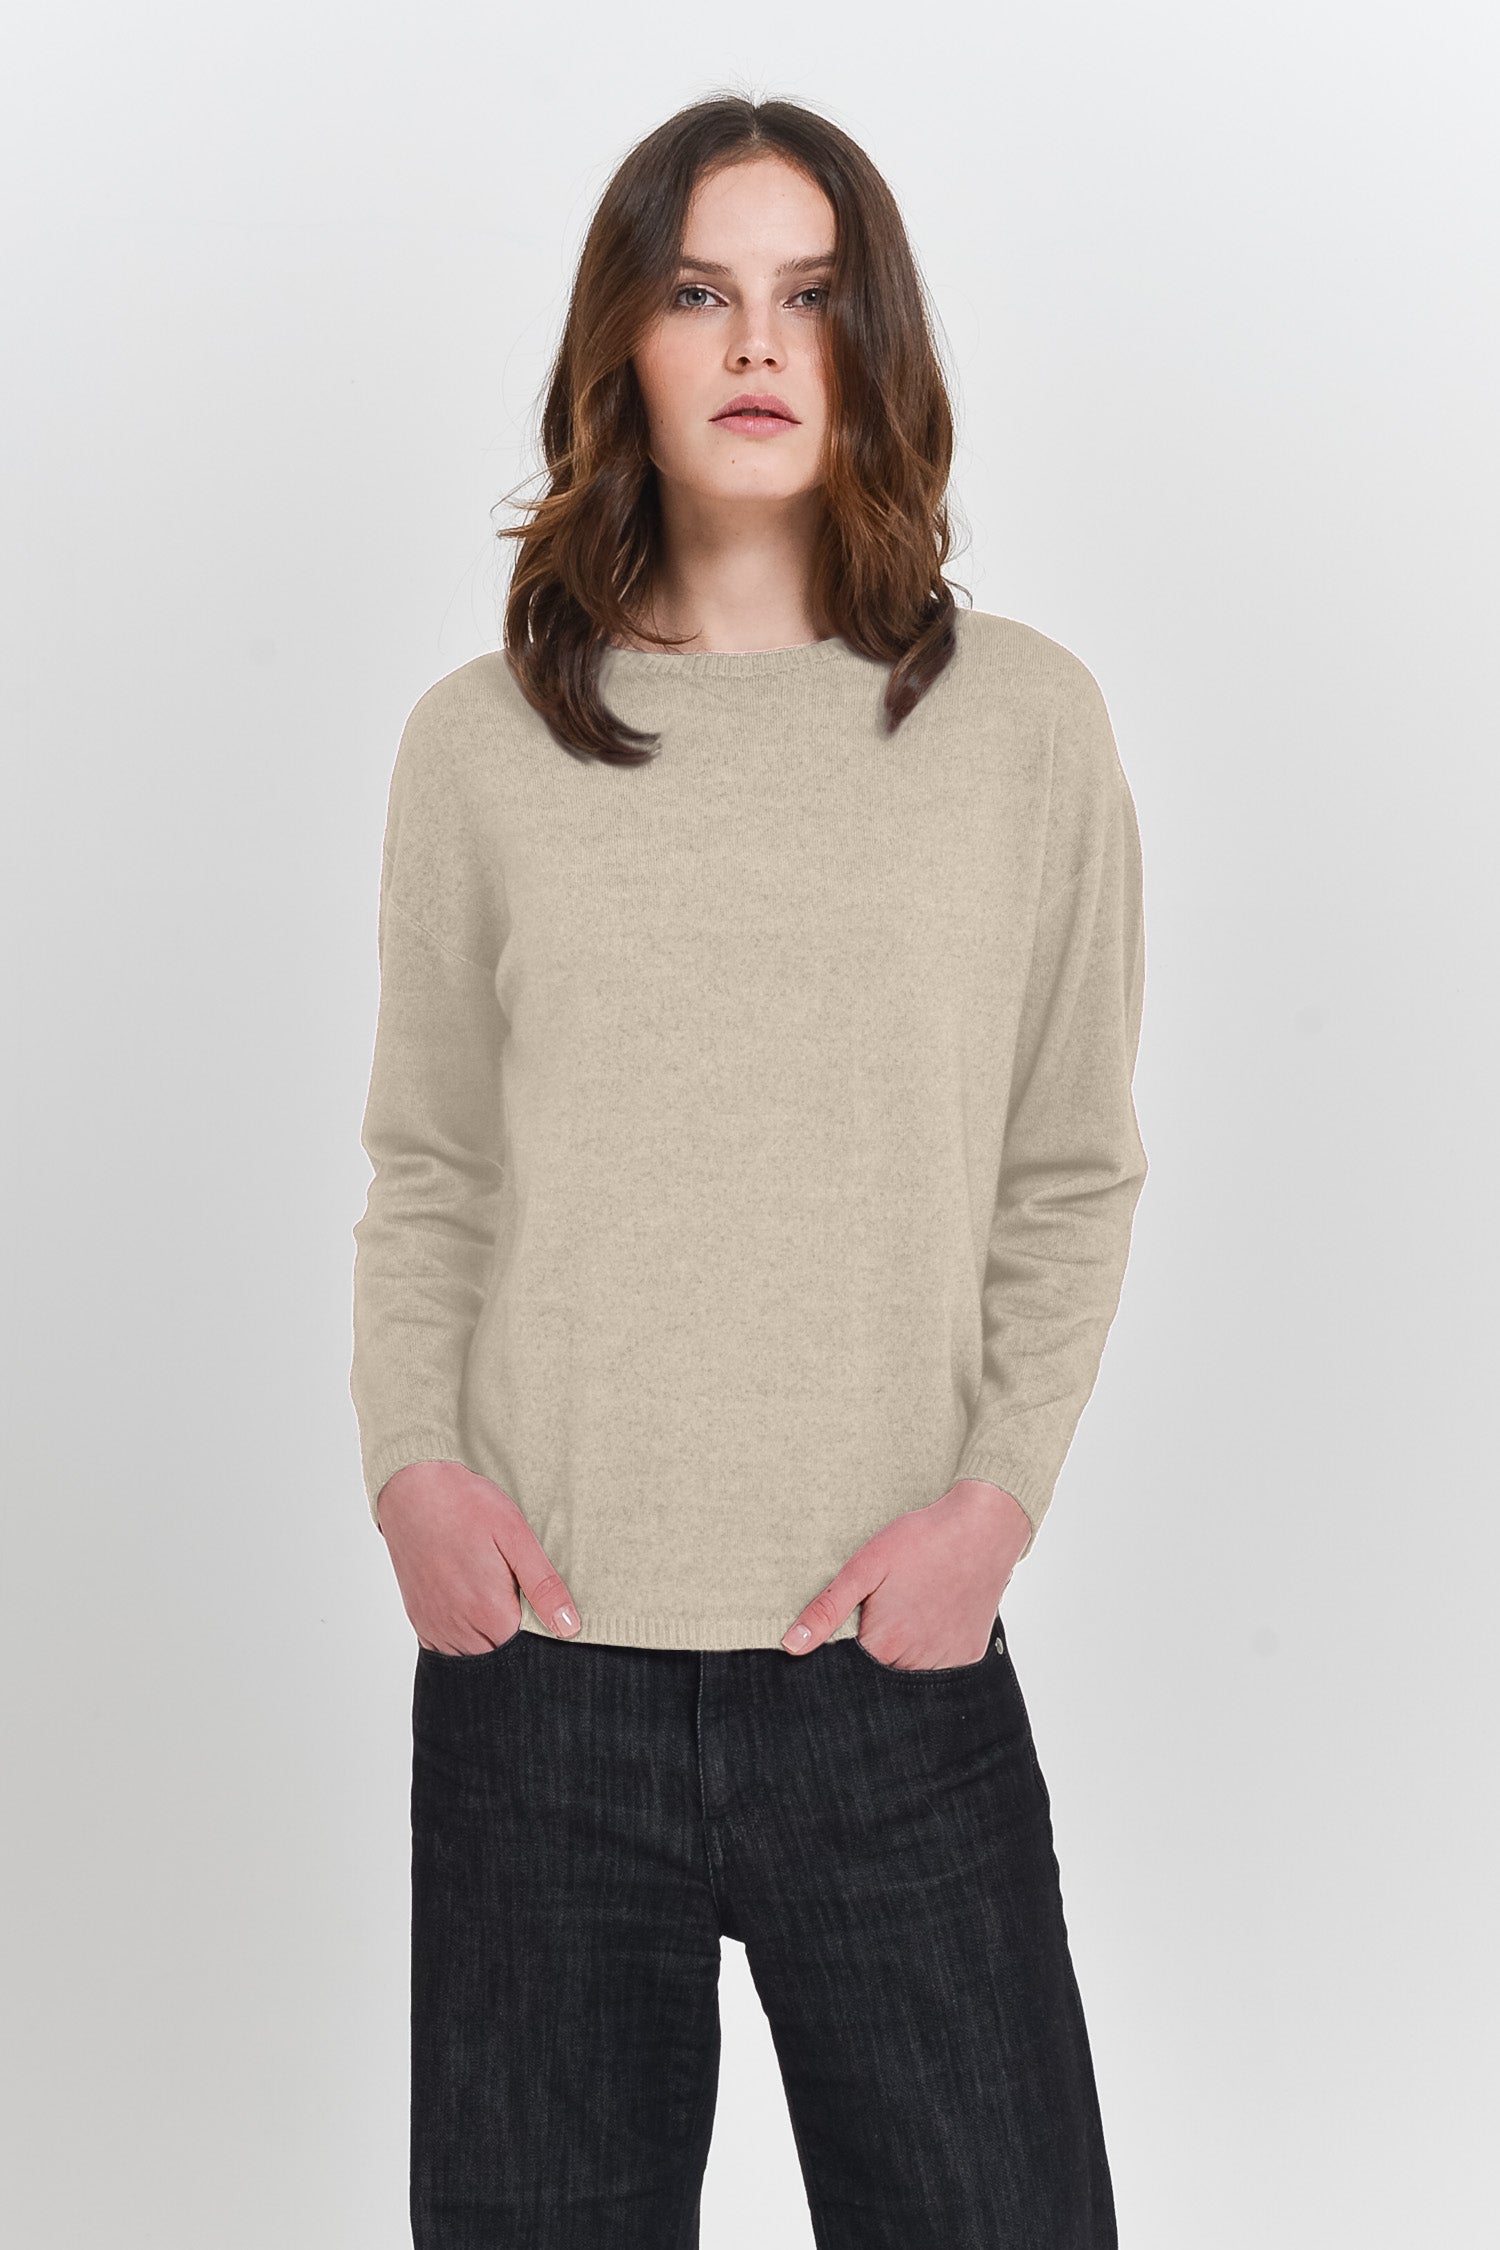 Reay Comfy Sweater - Fog